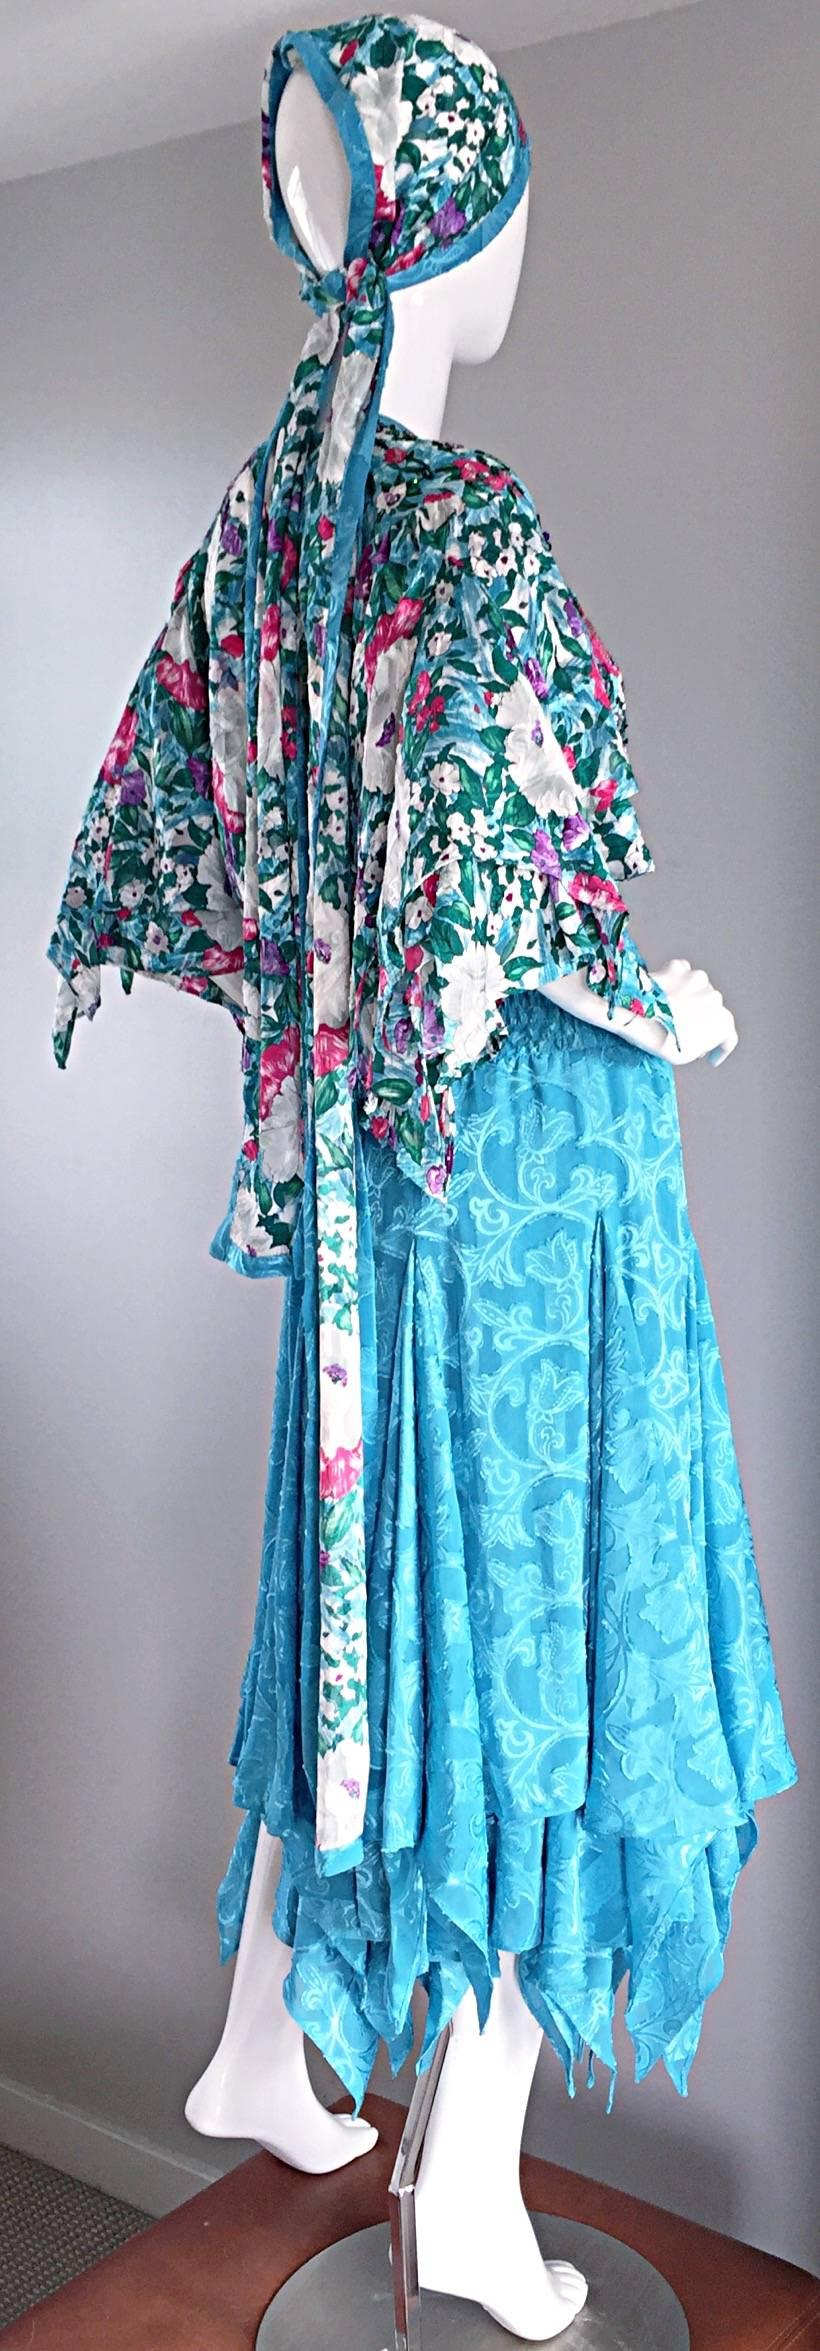 Blue Amazing Vintage Diane Freis Colorful Beaded Boho Dress w/ Head Scarf 